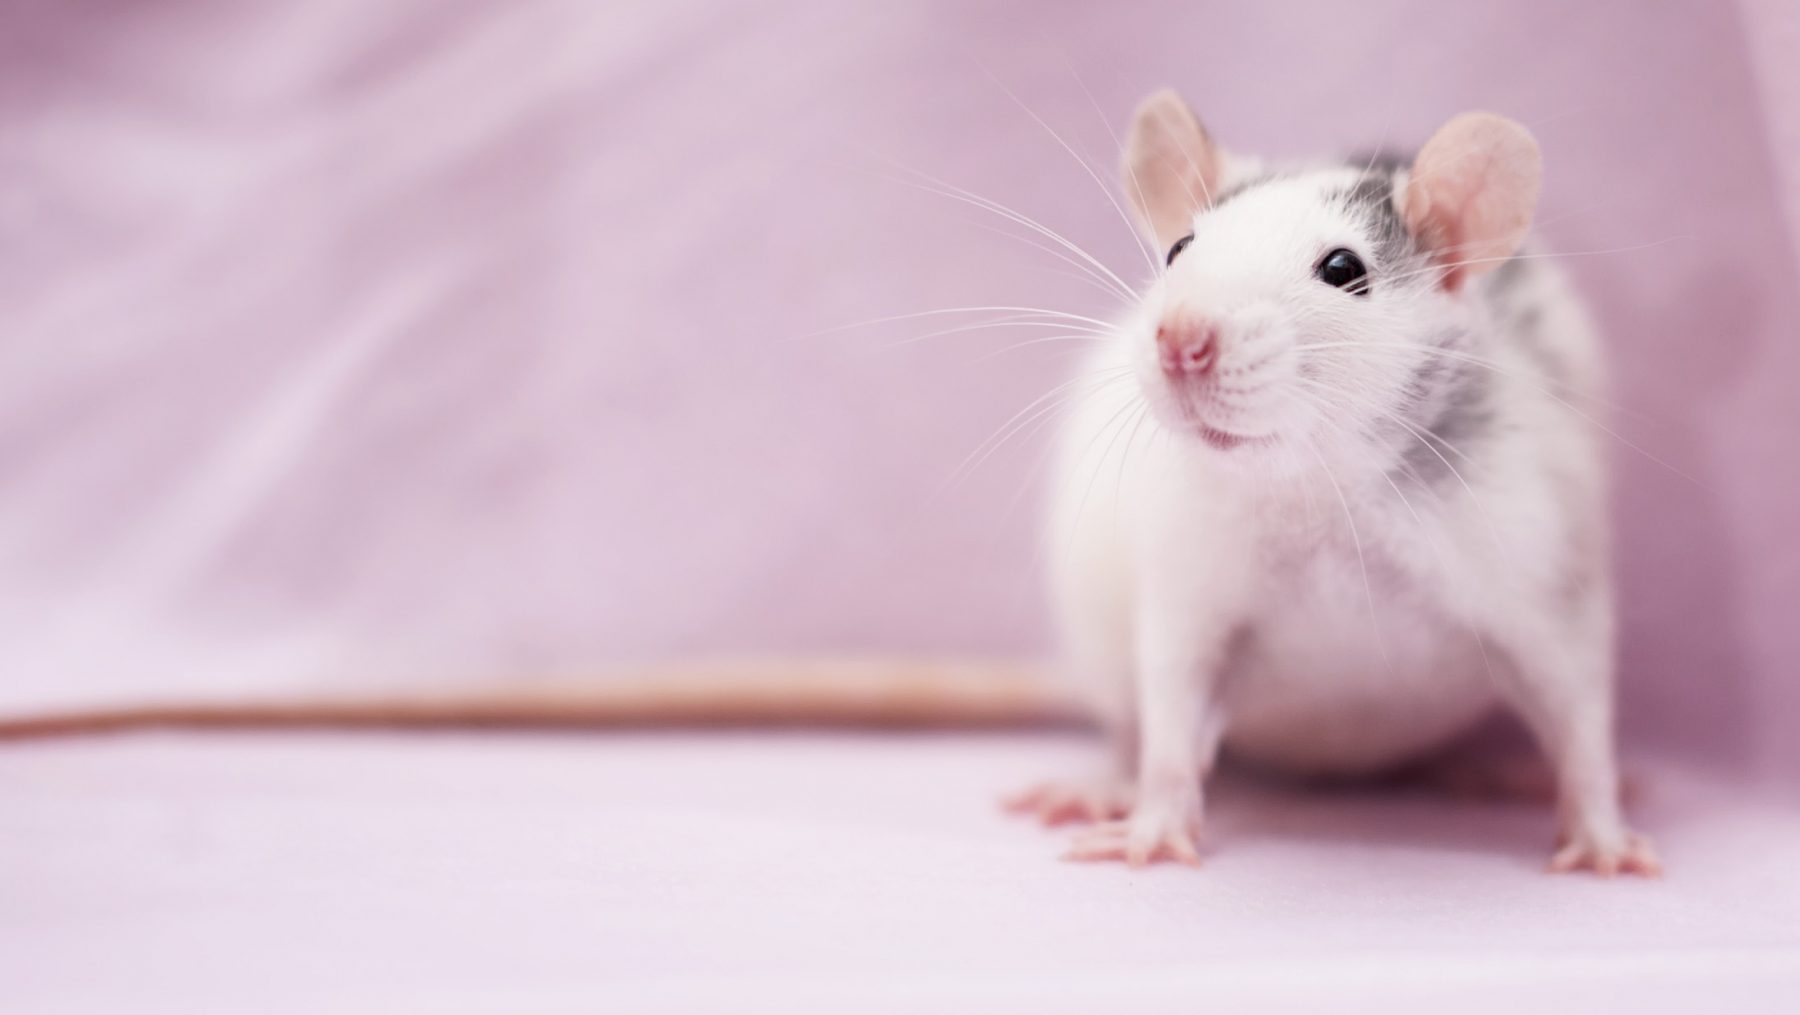 muizen ratten plaag tips kennis adviescentrum